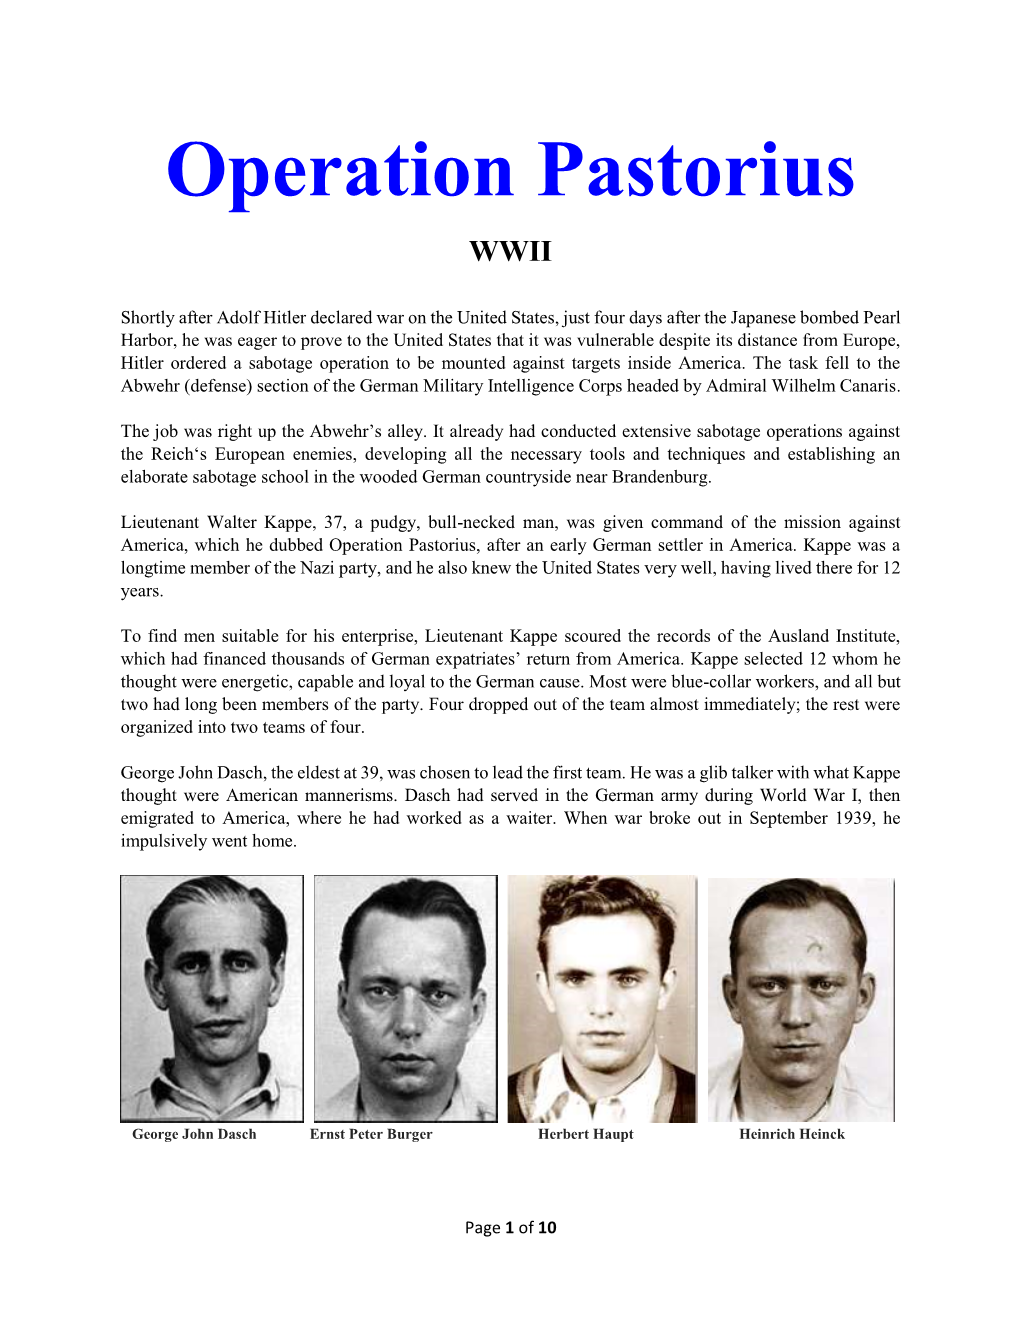 Operation Pastorius WWII